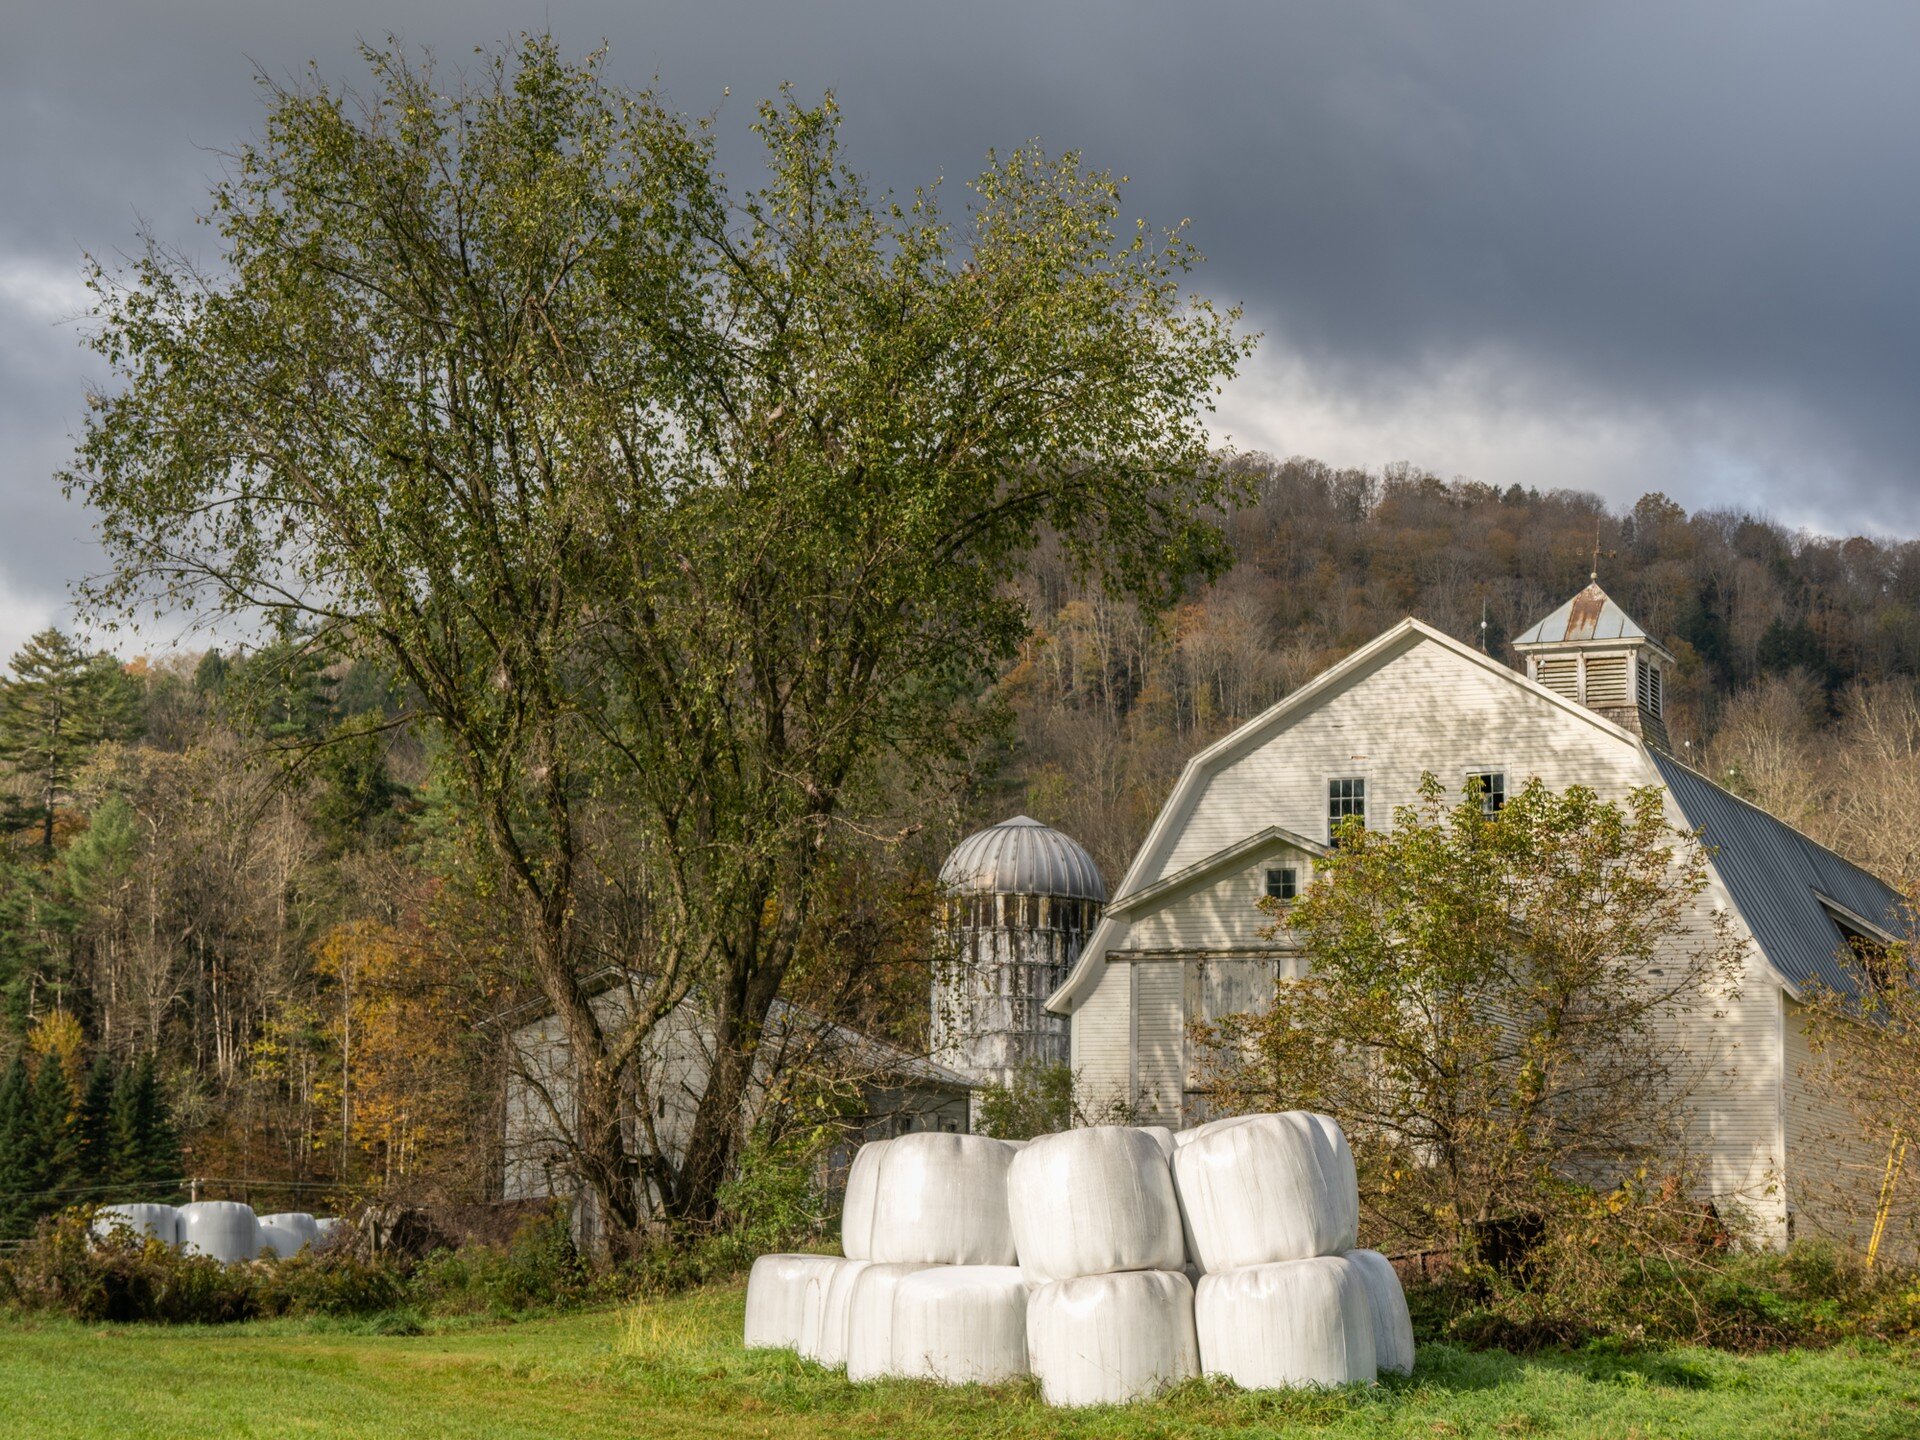 Bales and Barn, Vermont
.
.
.
#vermont #vermontlife #farm #farmlife